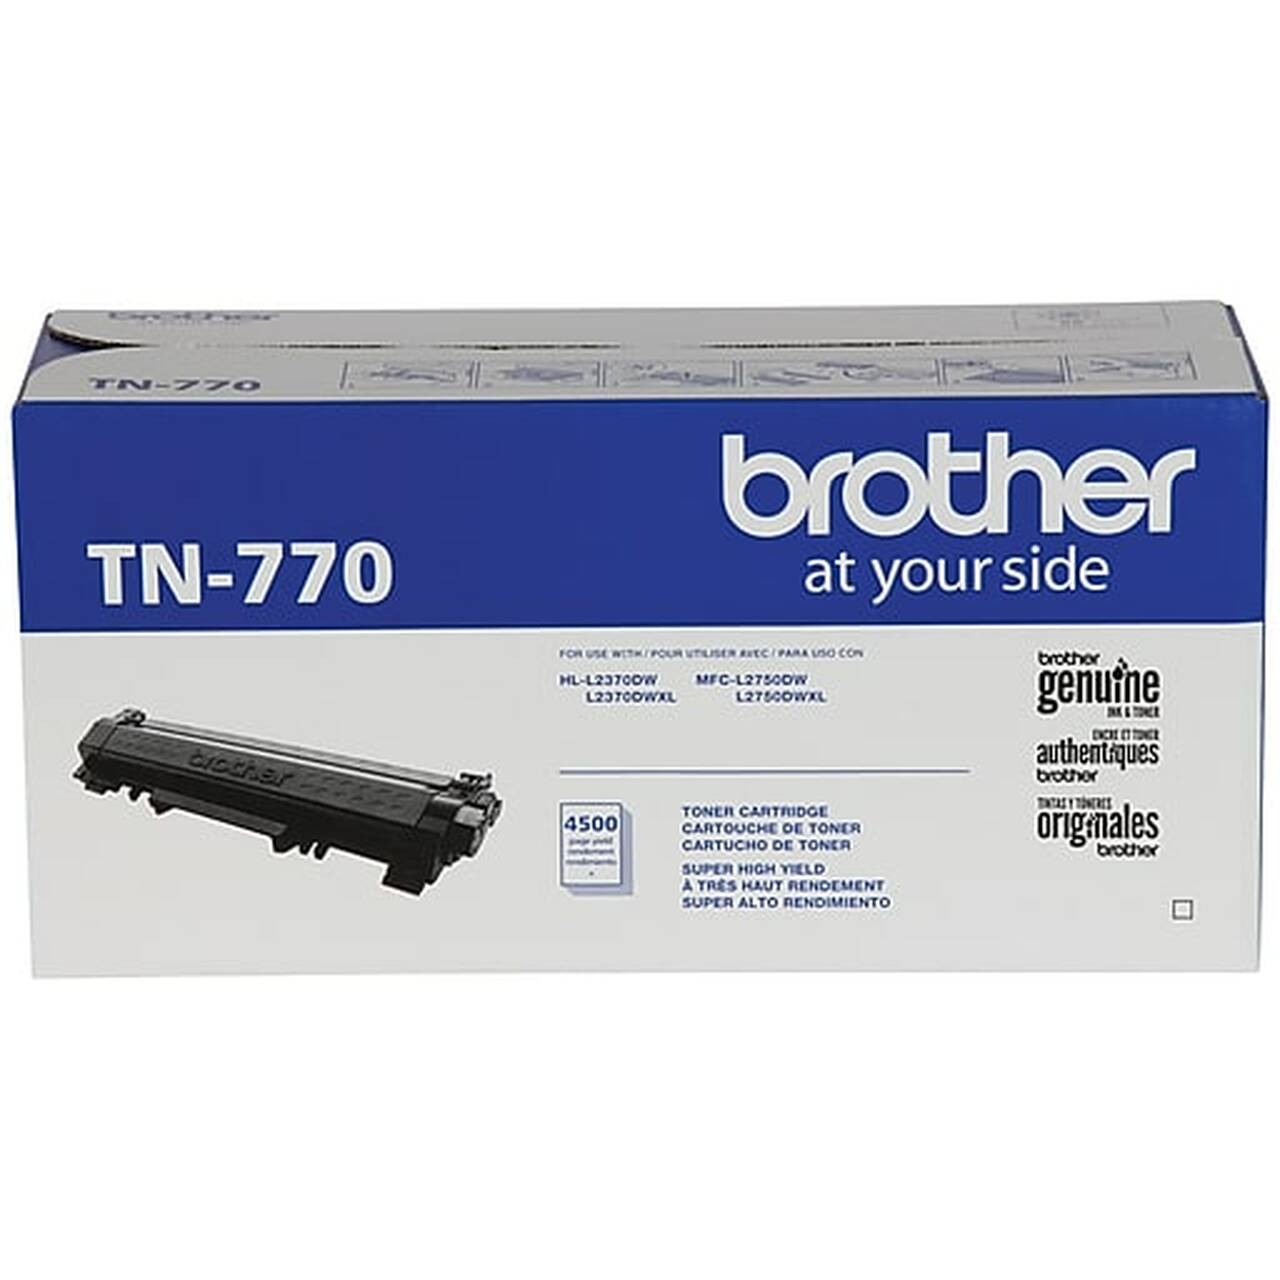 Absolute Toner Brother TN770 Black High Yield Original Genuine OEM Toner Cartridge Original Brother Cartridges